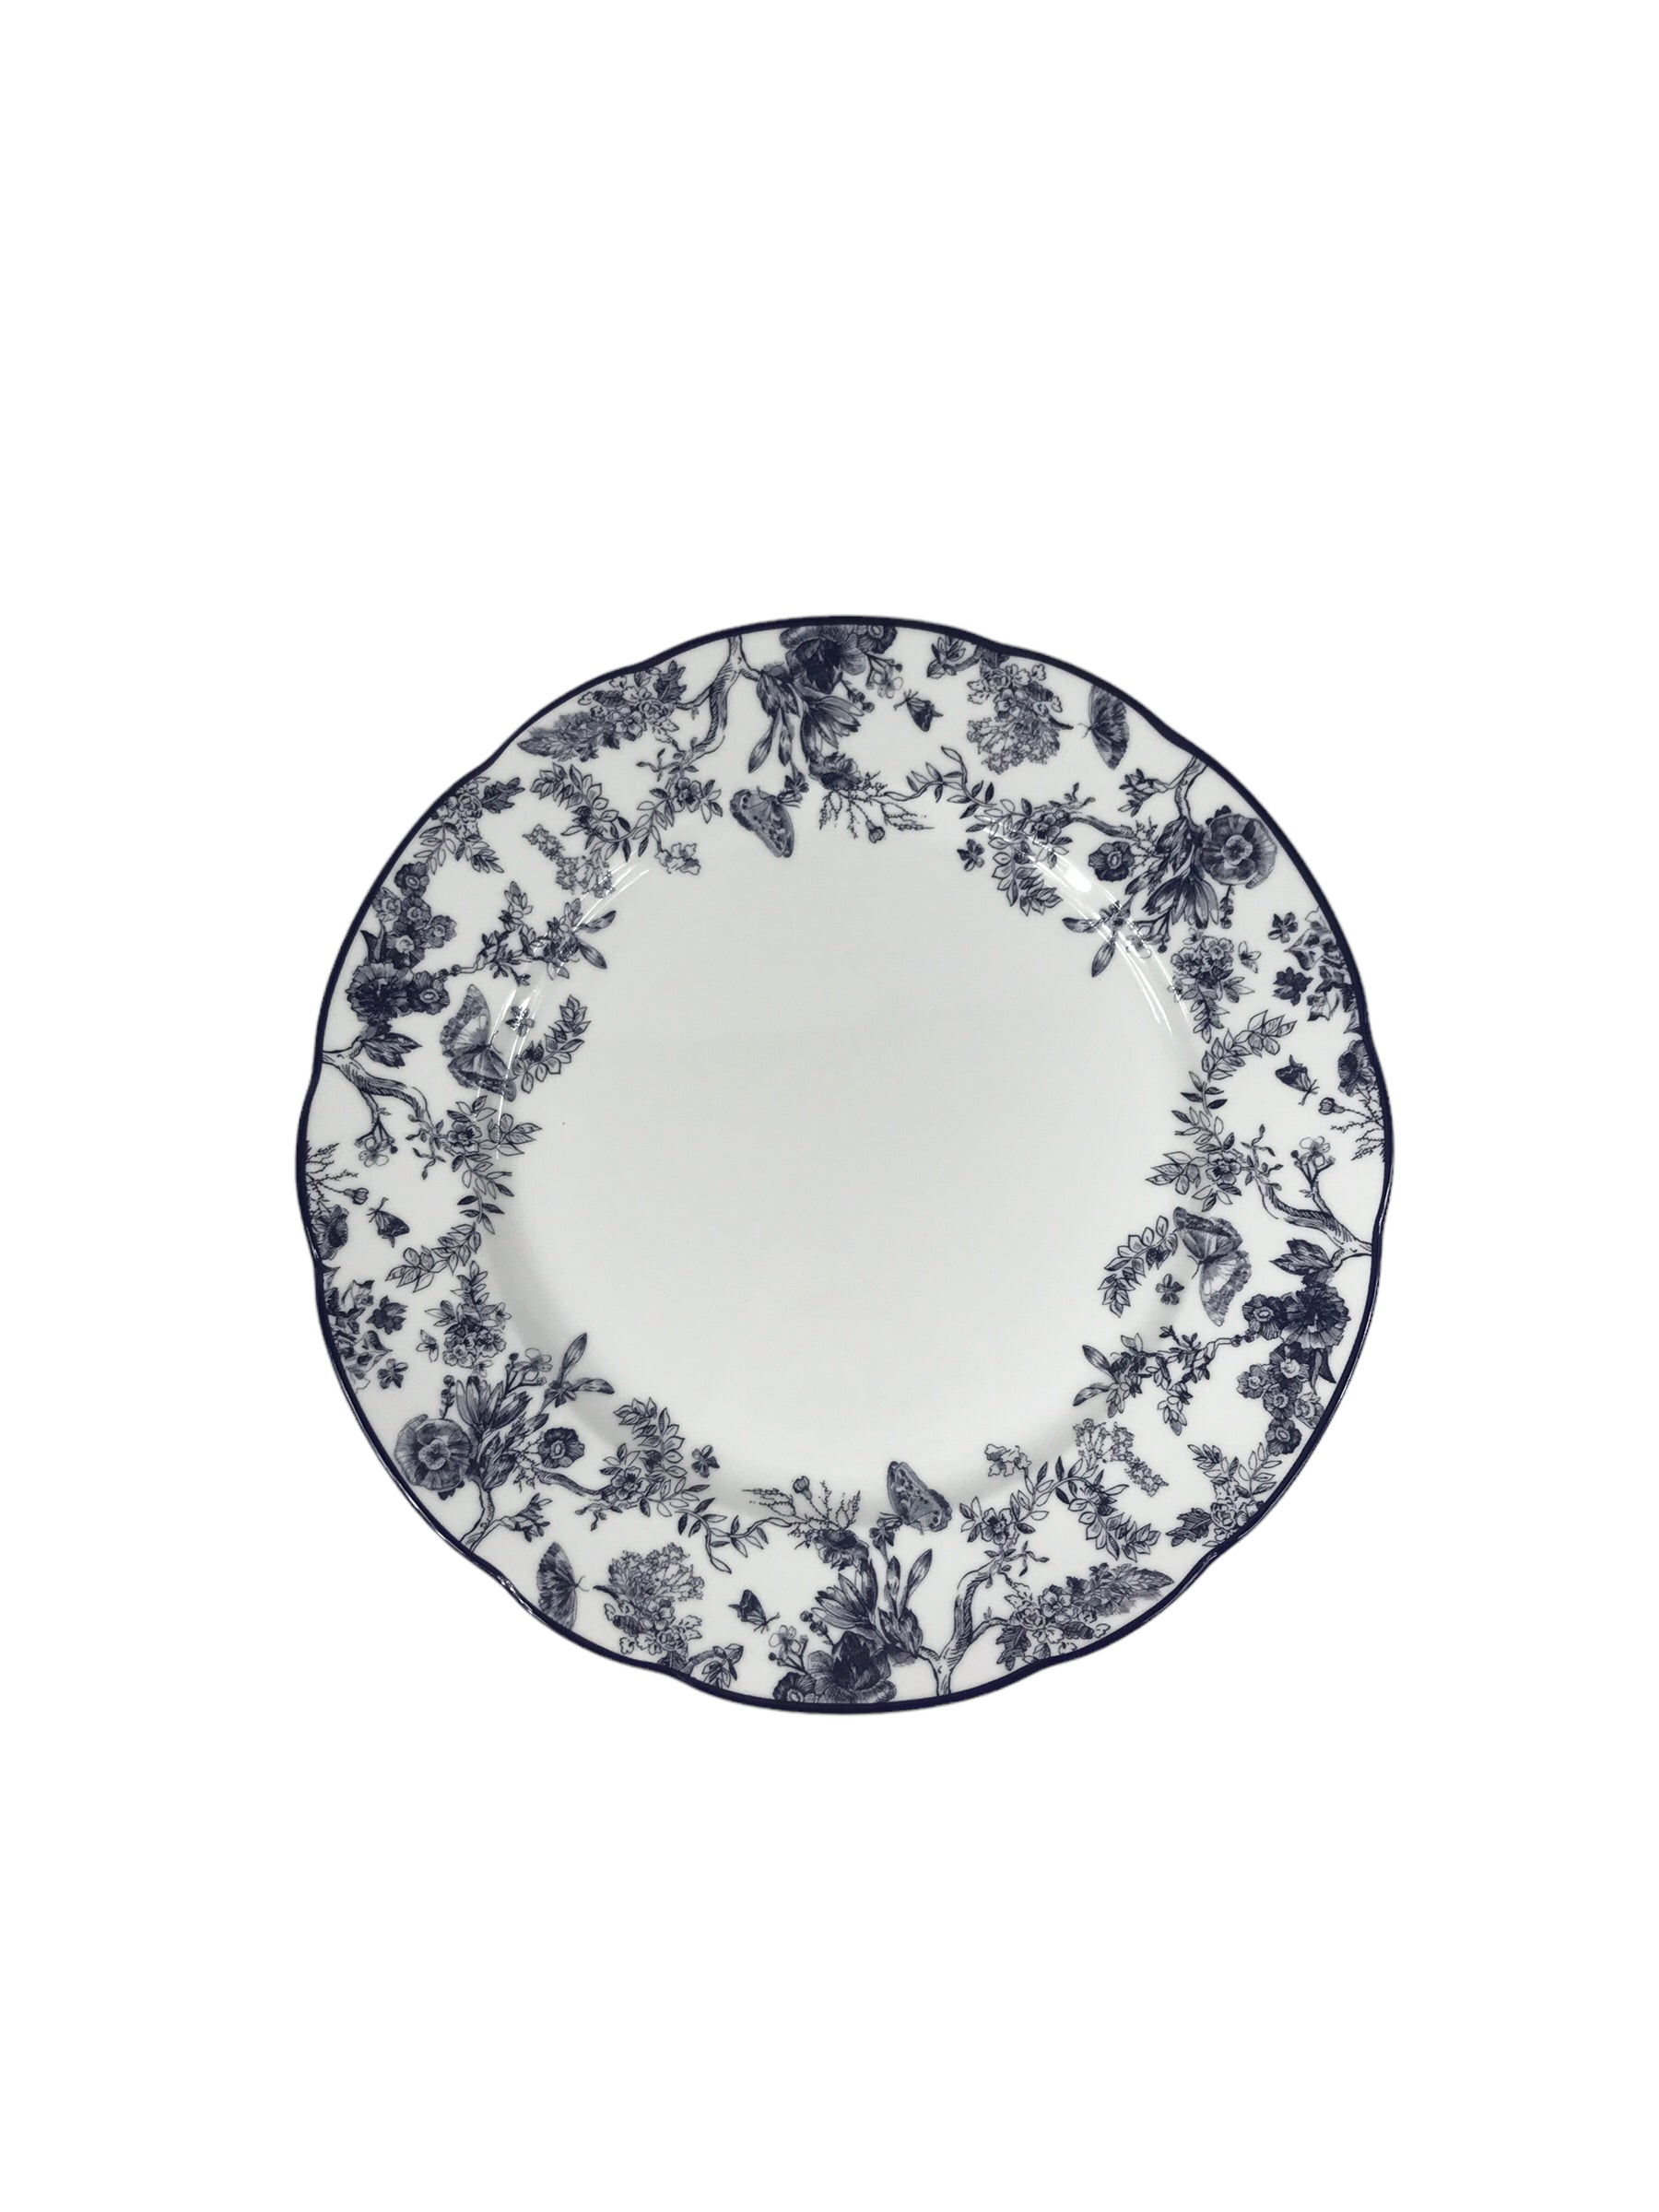 Blue Toile de Jouy Dinner Porcelain Plate set of 2